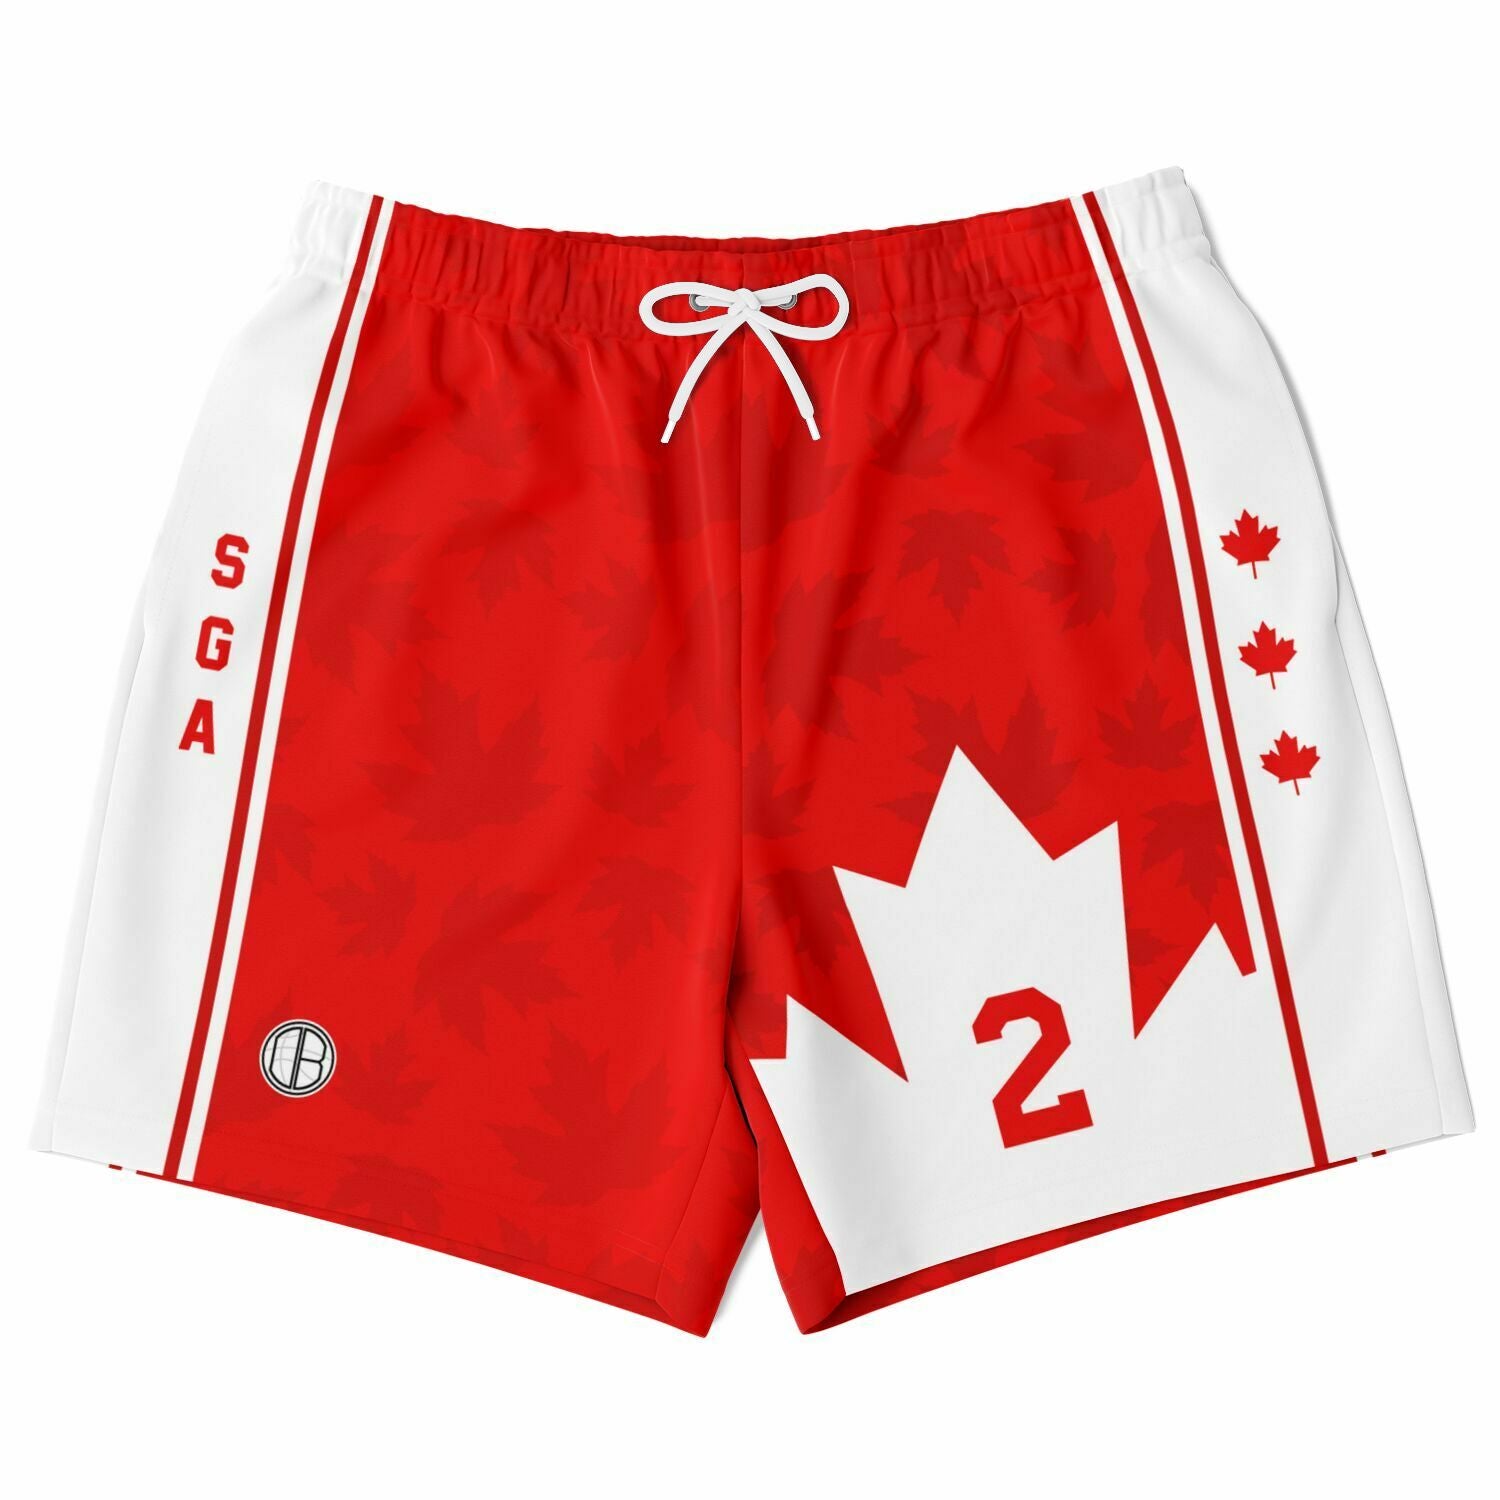 DearBBall Fashion Short - SGA 2 Canada Maple Red Edition